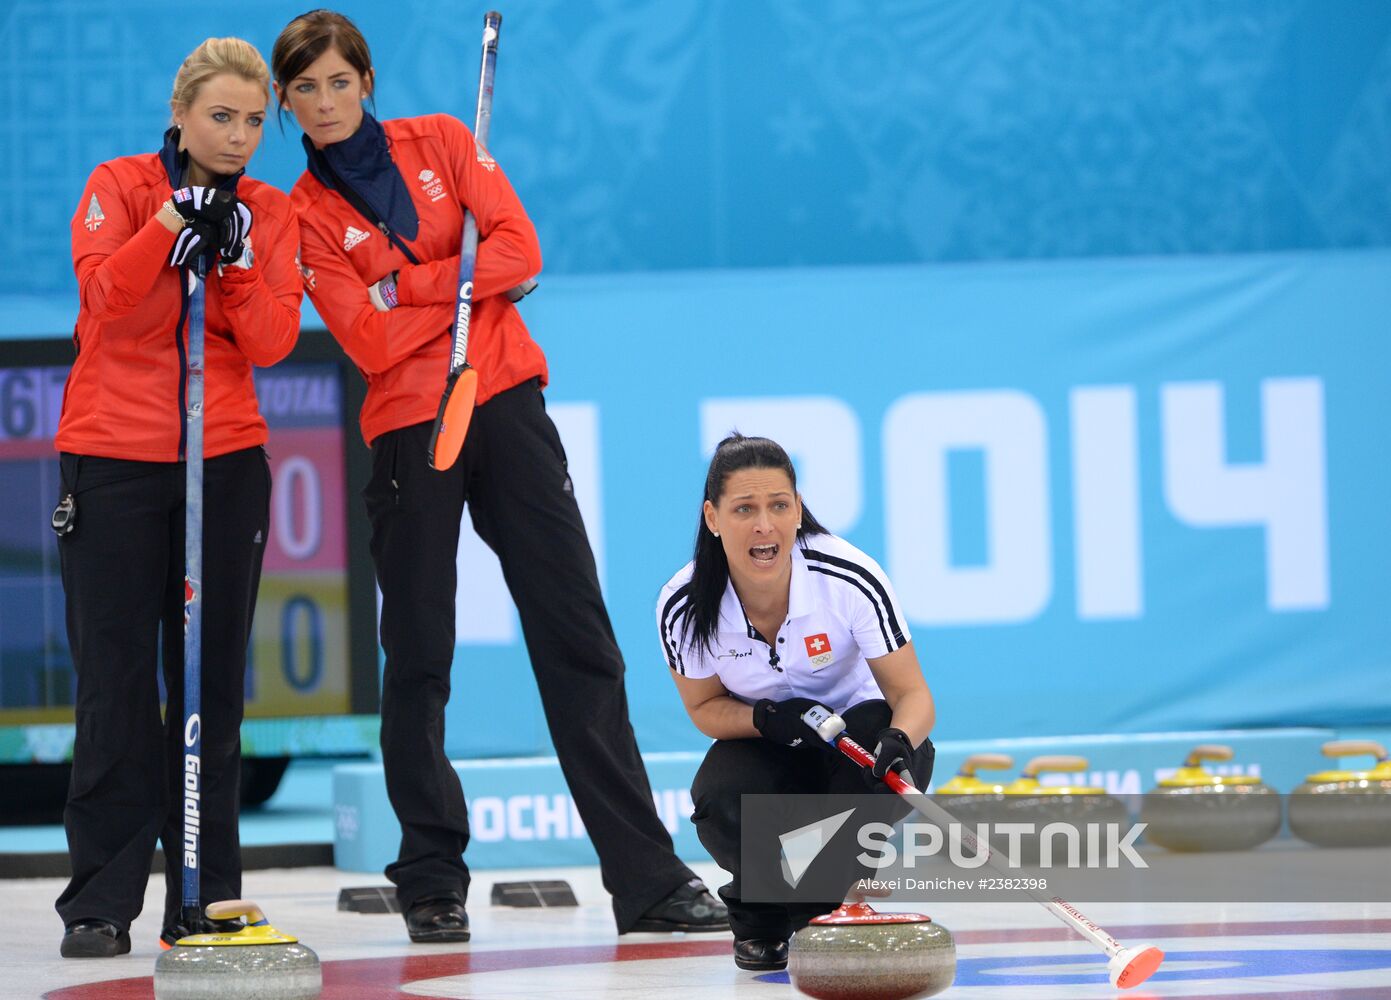 2014 Winter Olympics. Curling